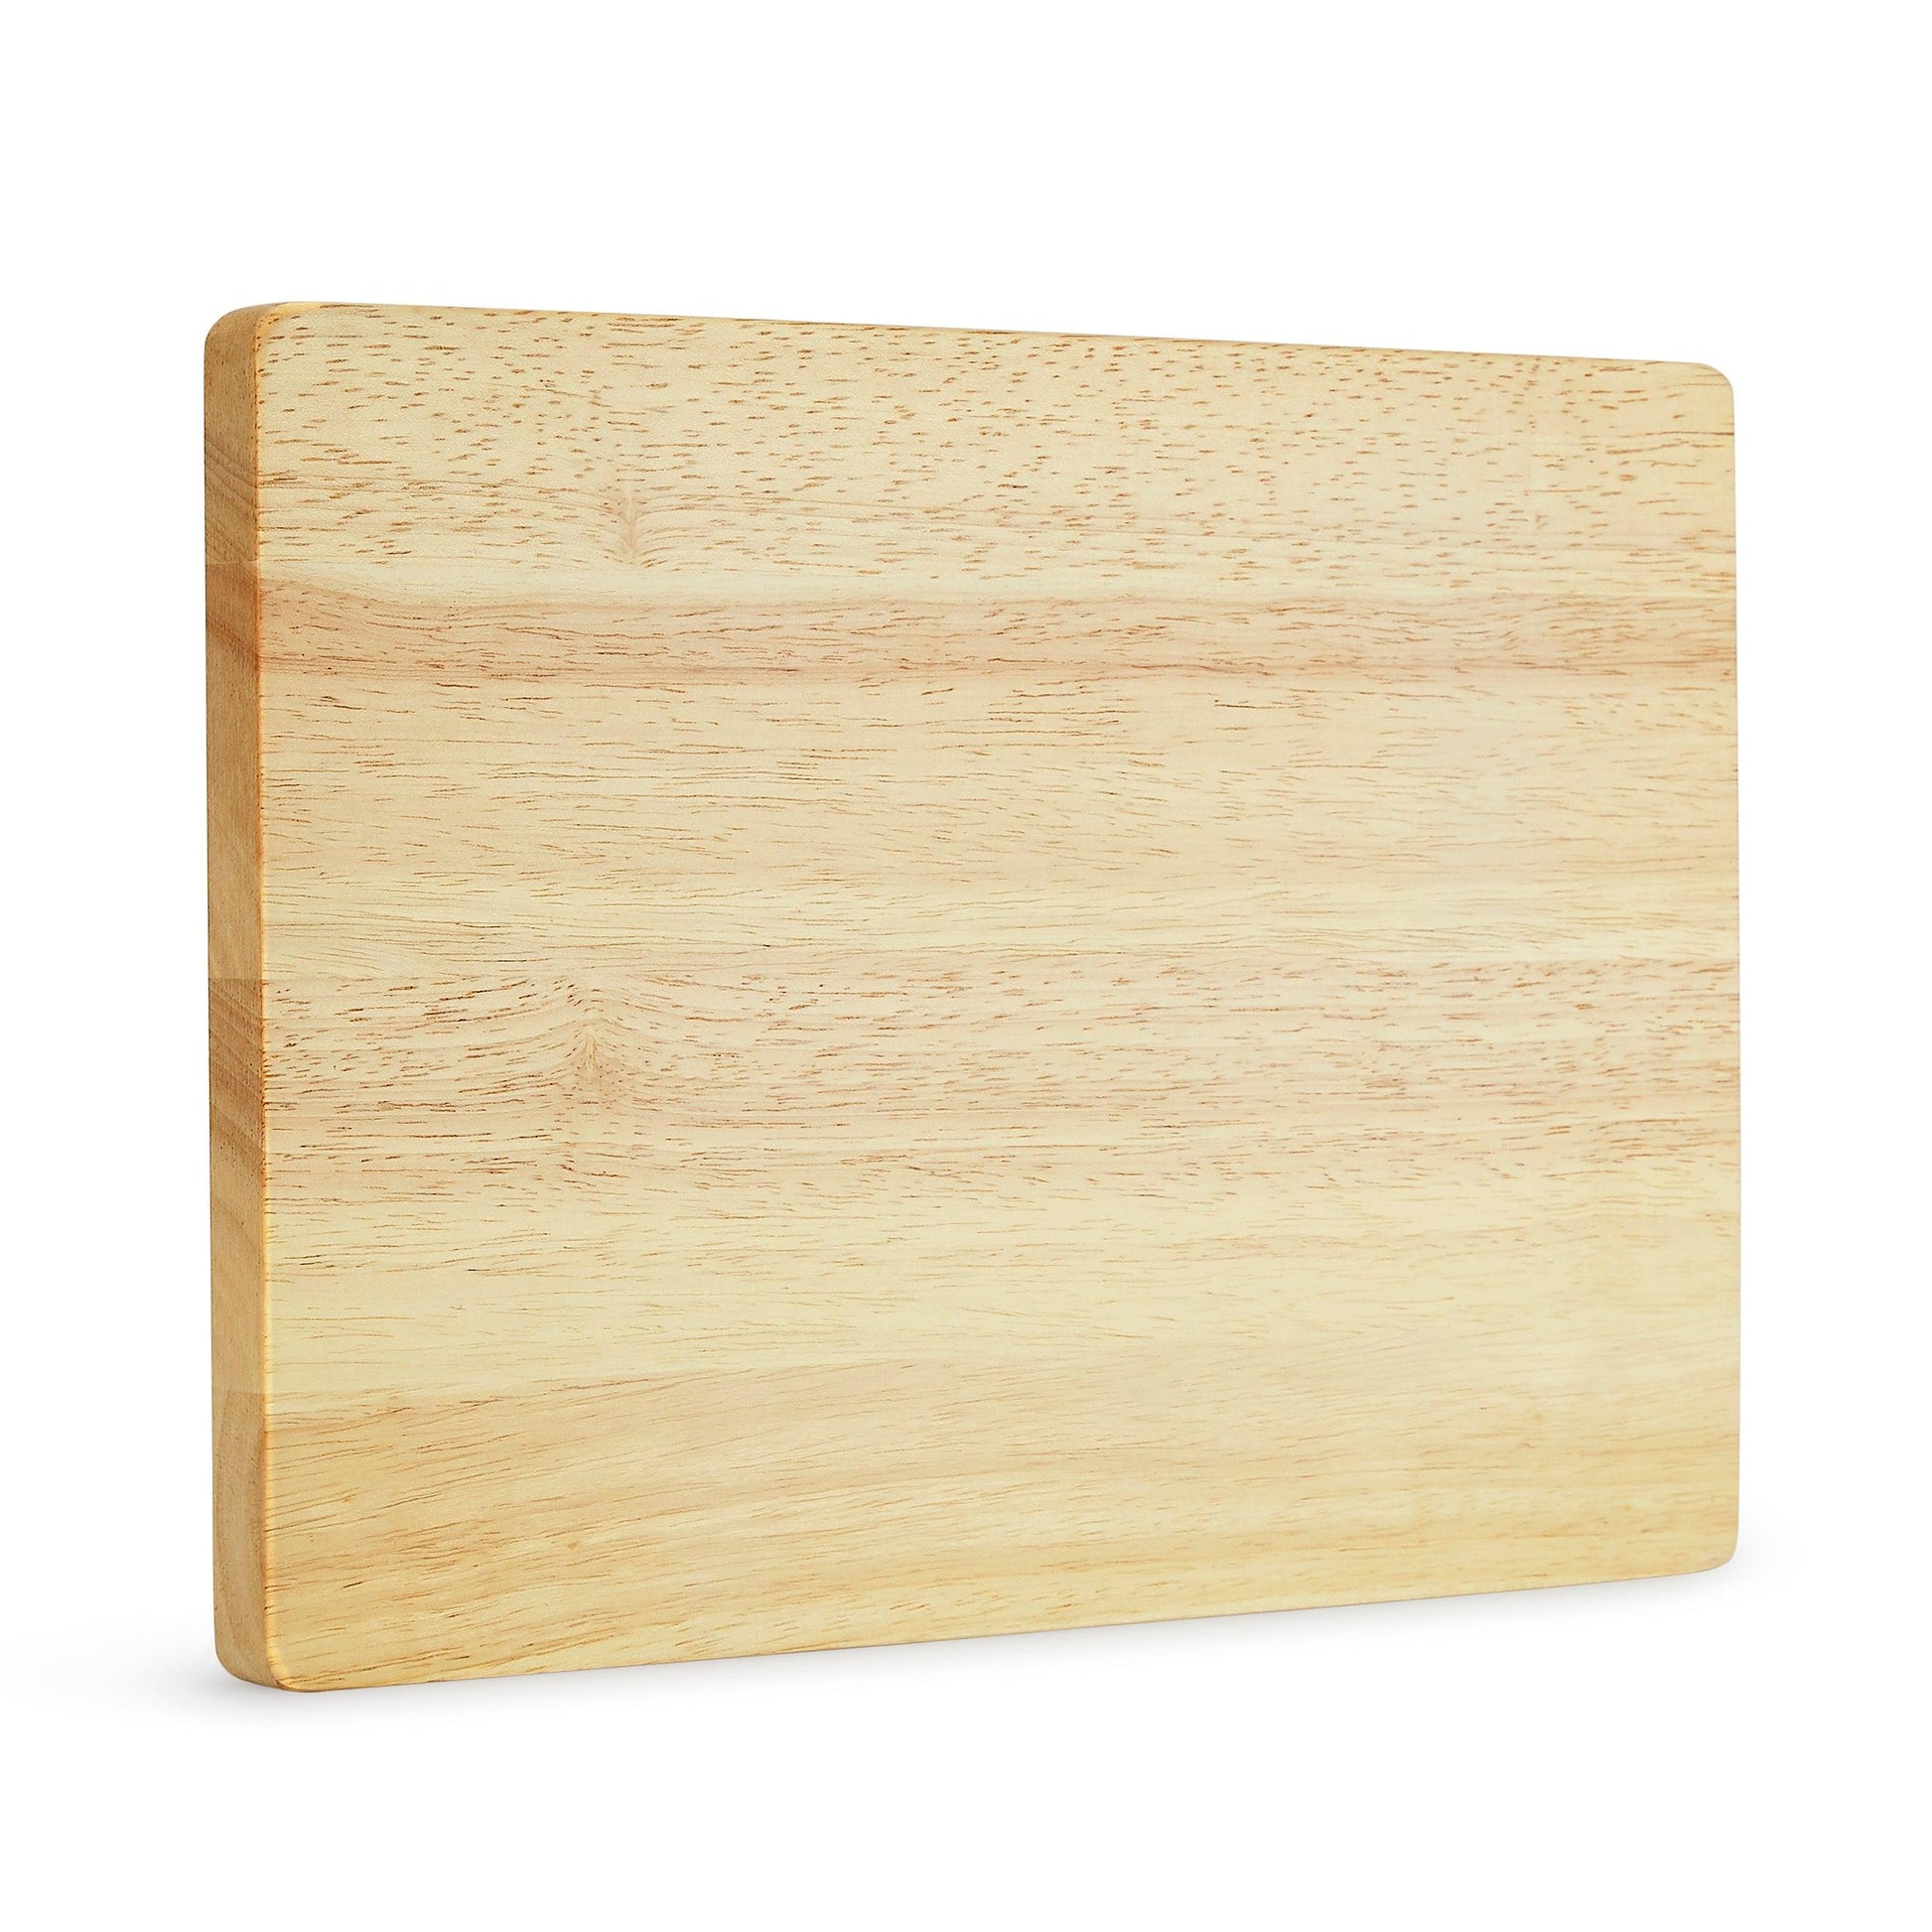 Rubber Wood Cube Cutting Boards  Cutting Board Chopping Block